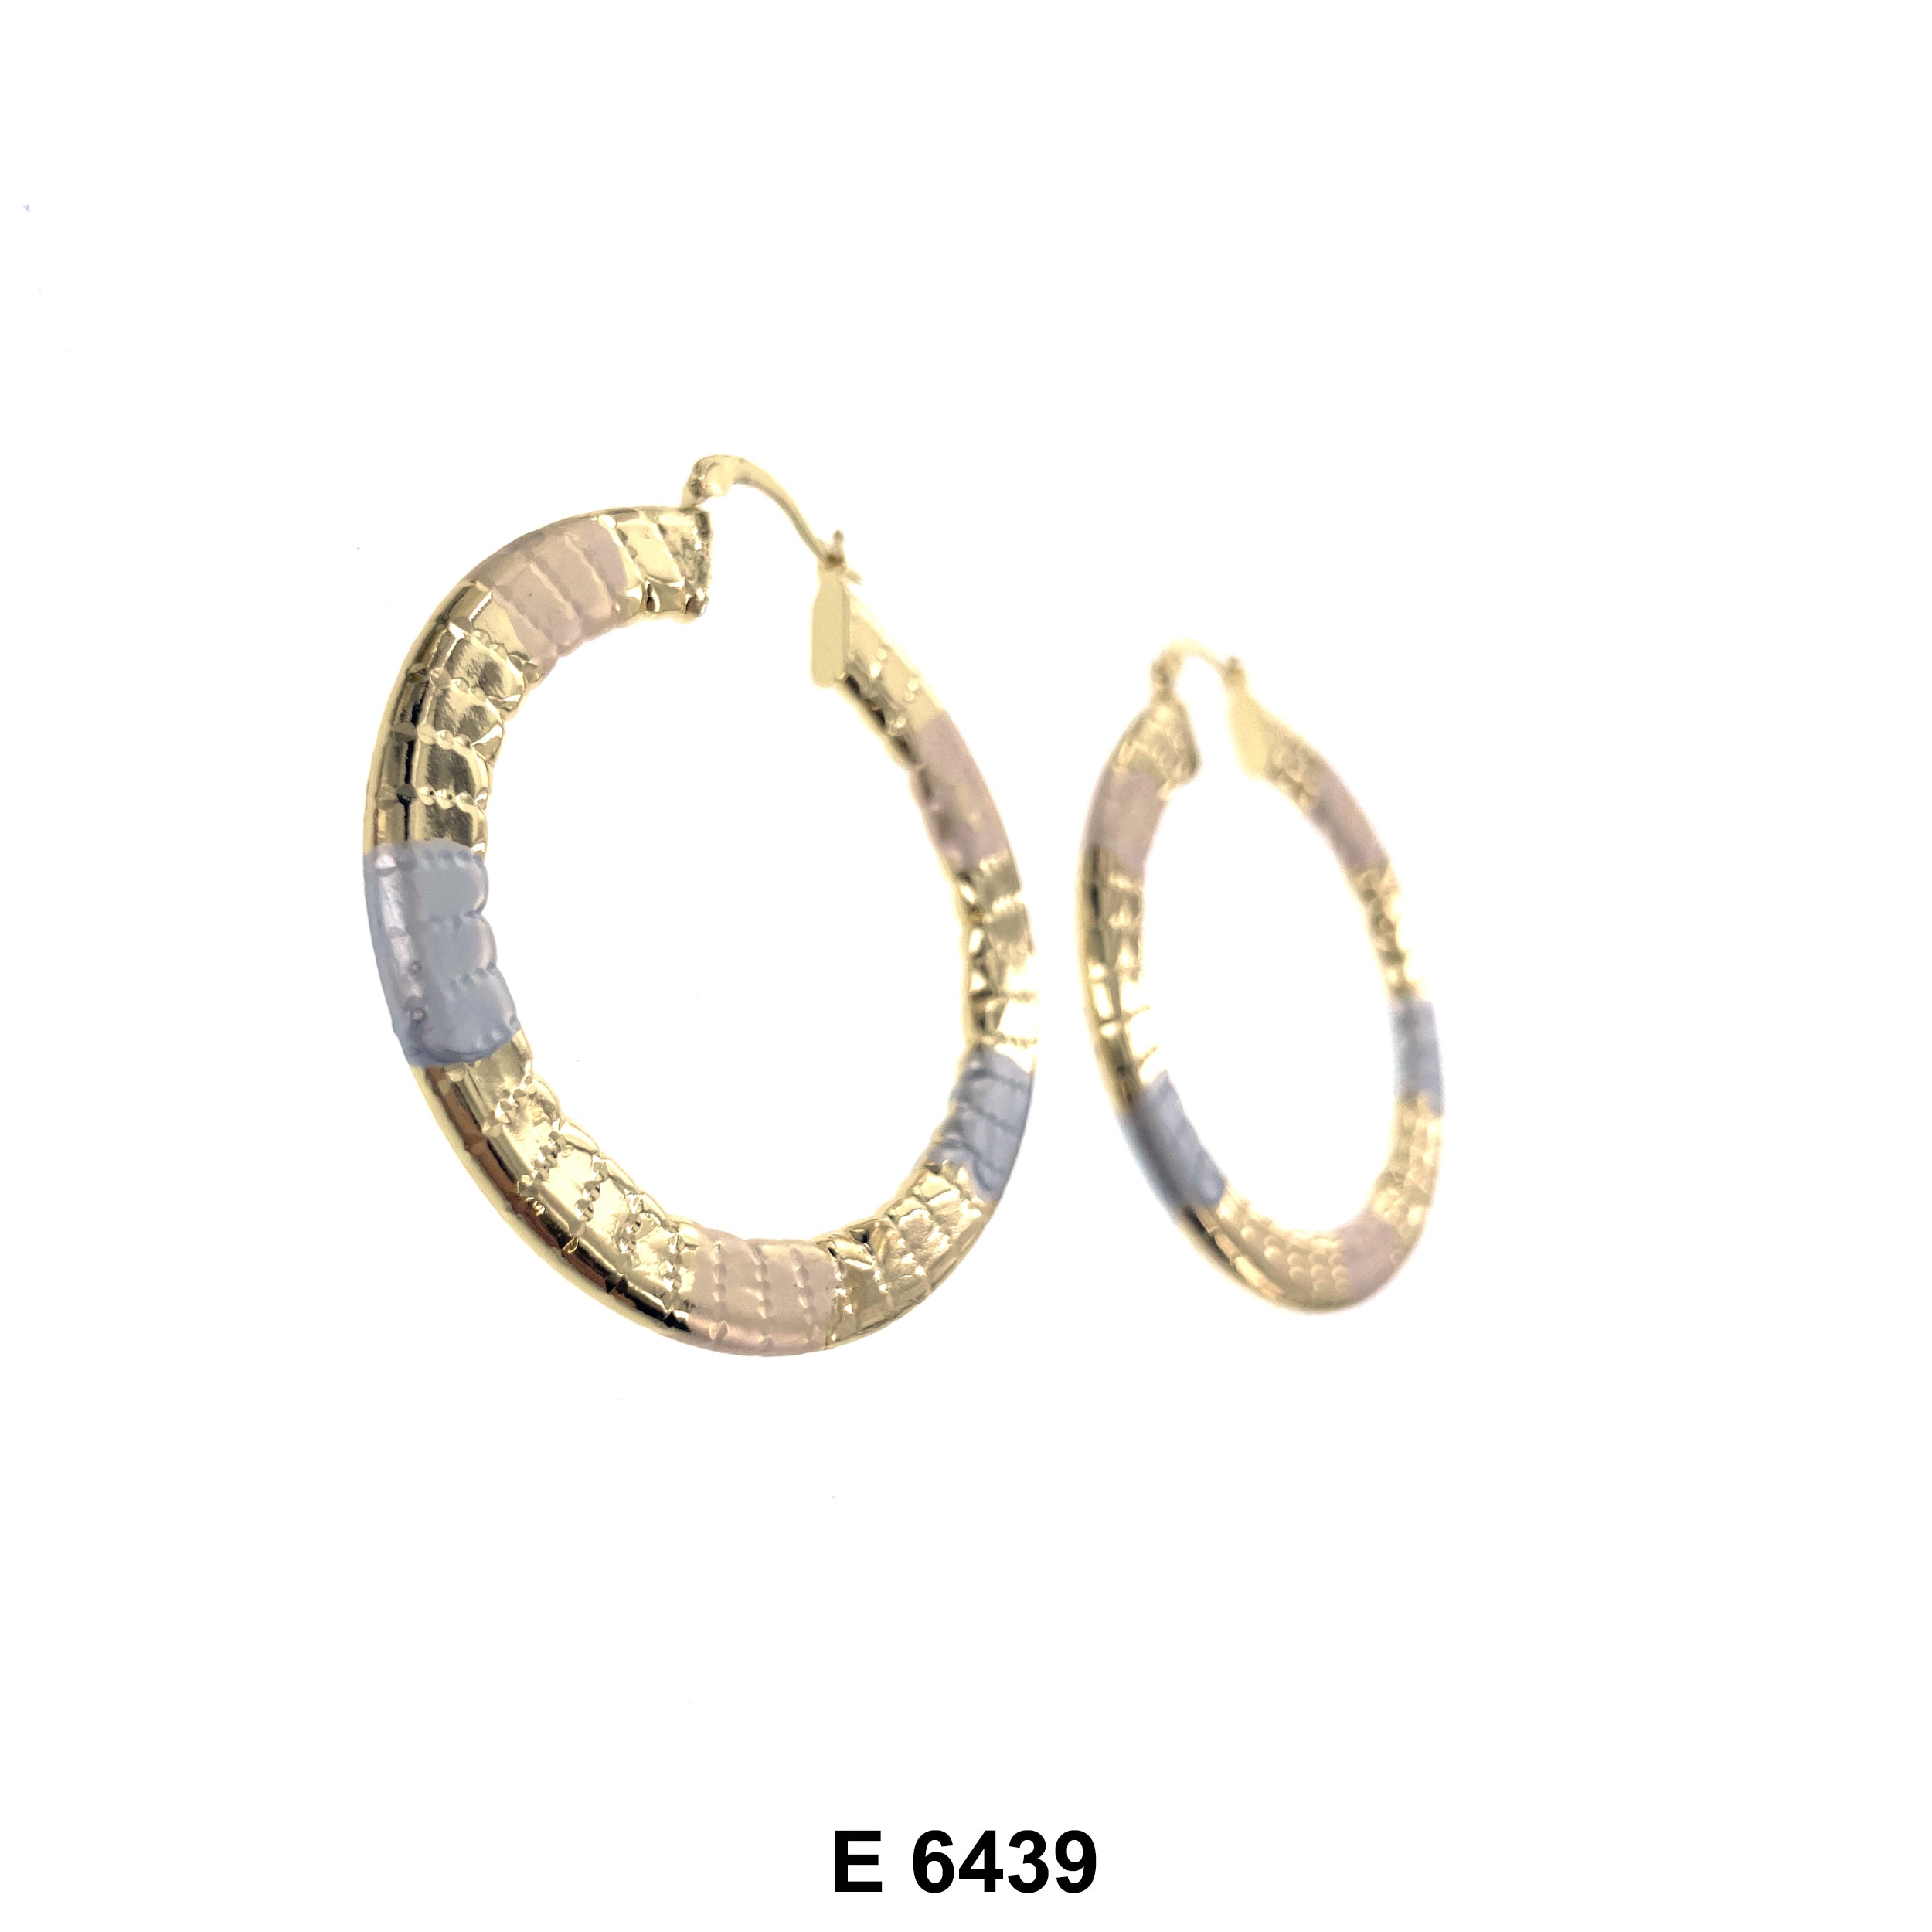 Engraved Hoop Earrings E 6439